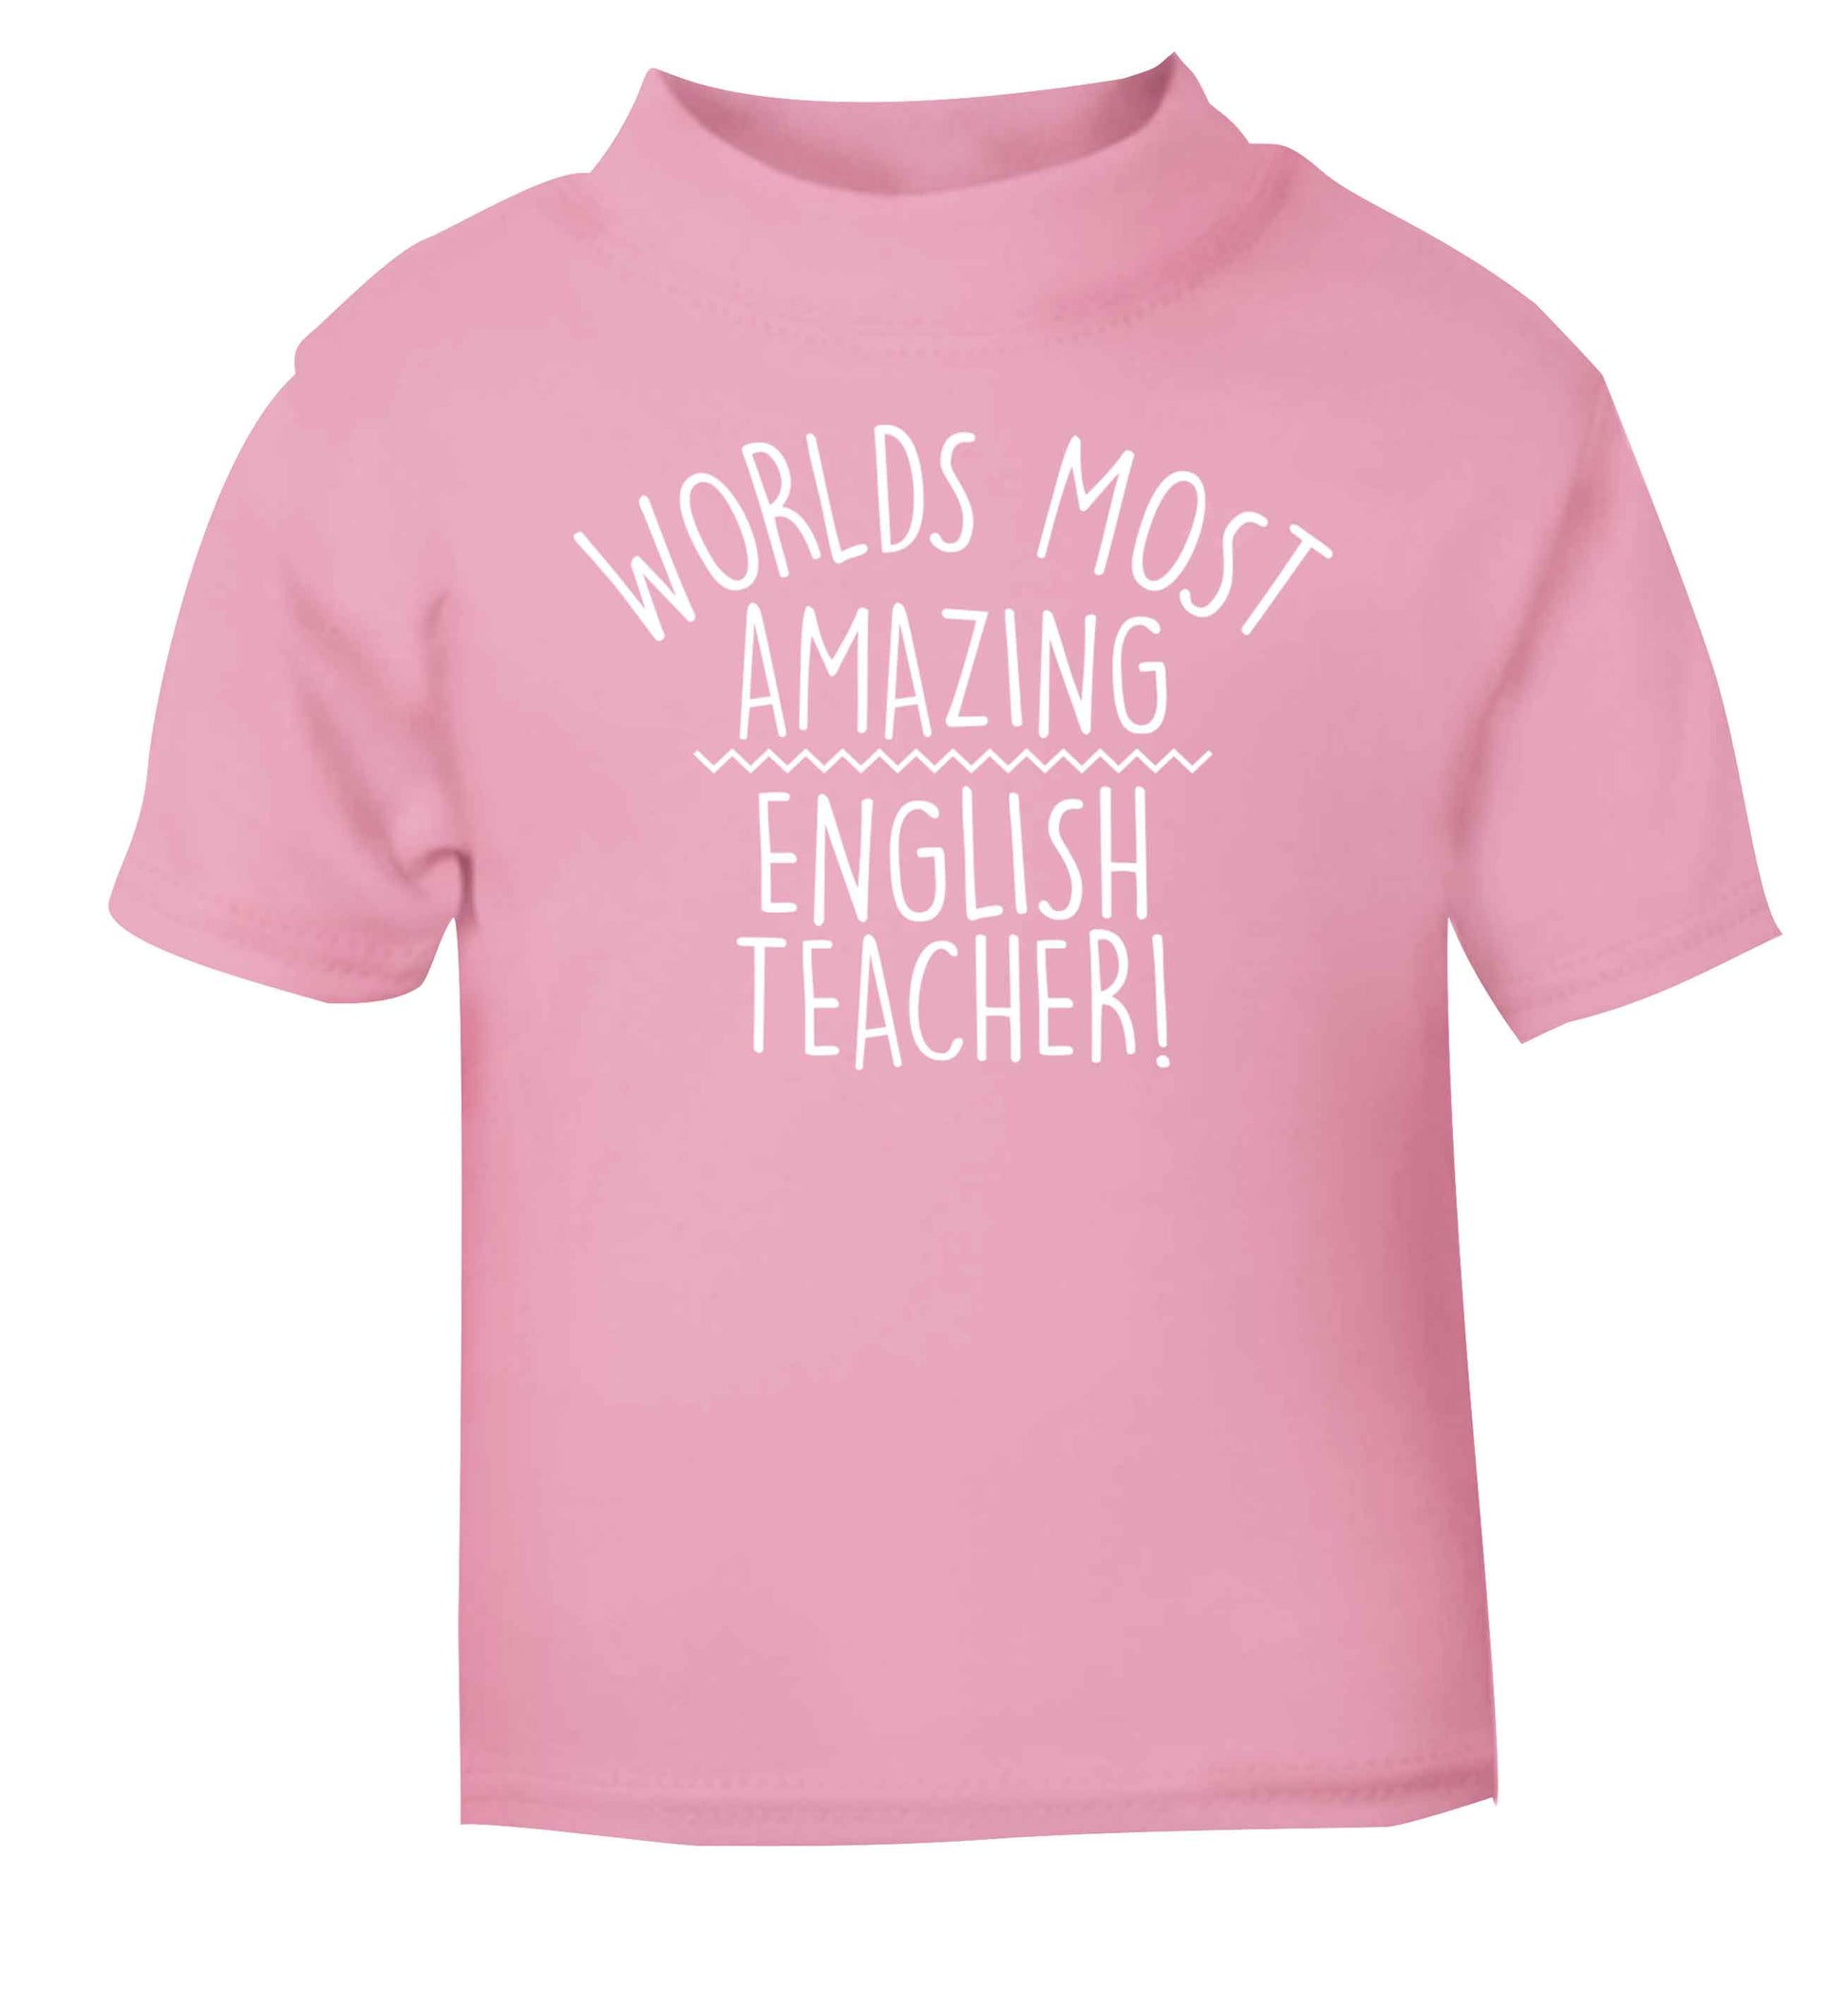 Worlds most amazing English teacher light pink baby toddler Tshirt 2 Years